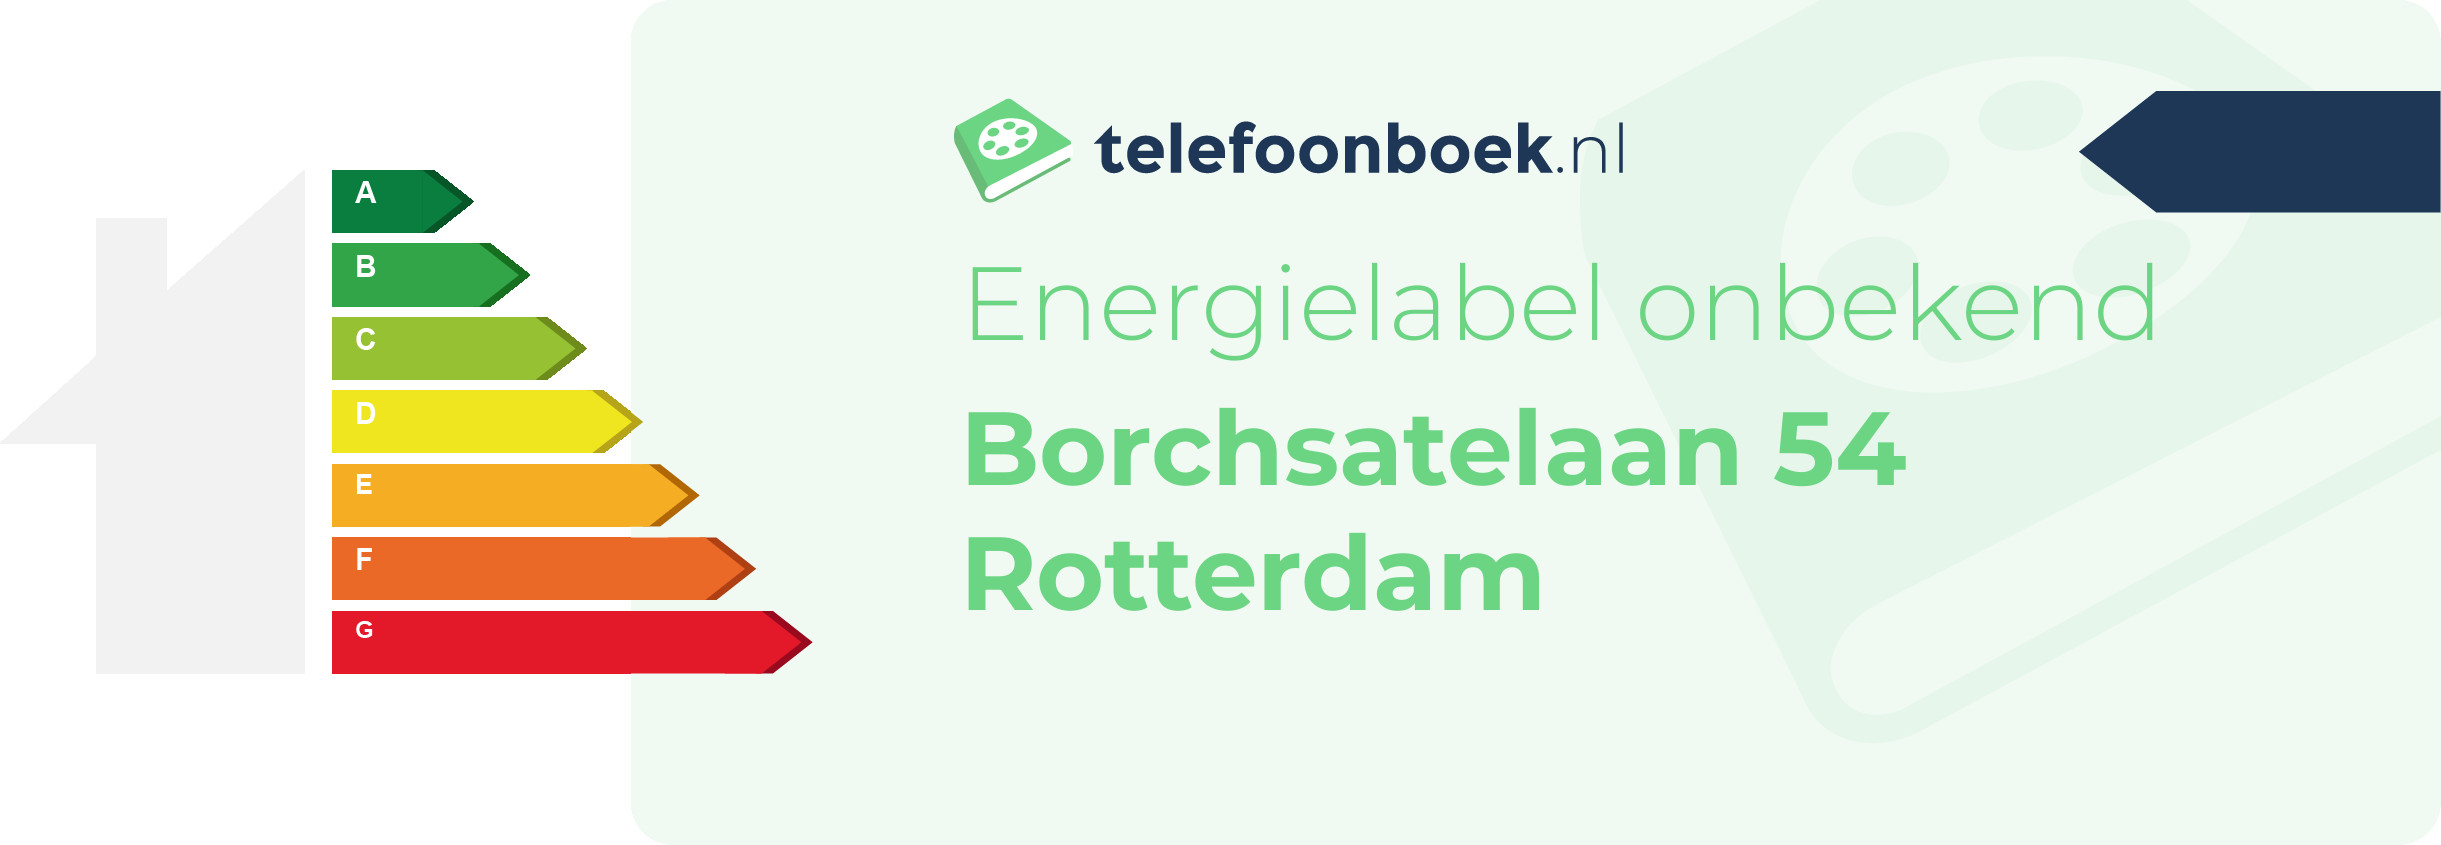 Energielabel Borchsatelaan 54 Rotterdam